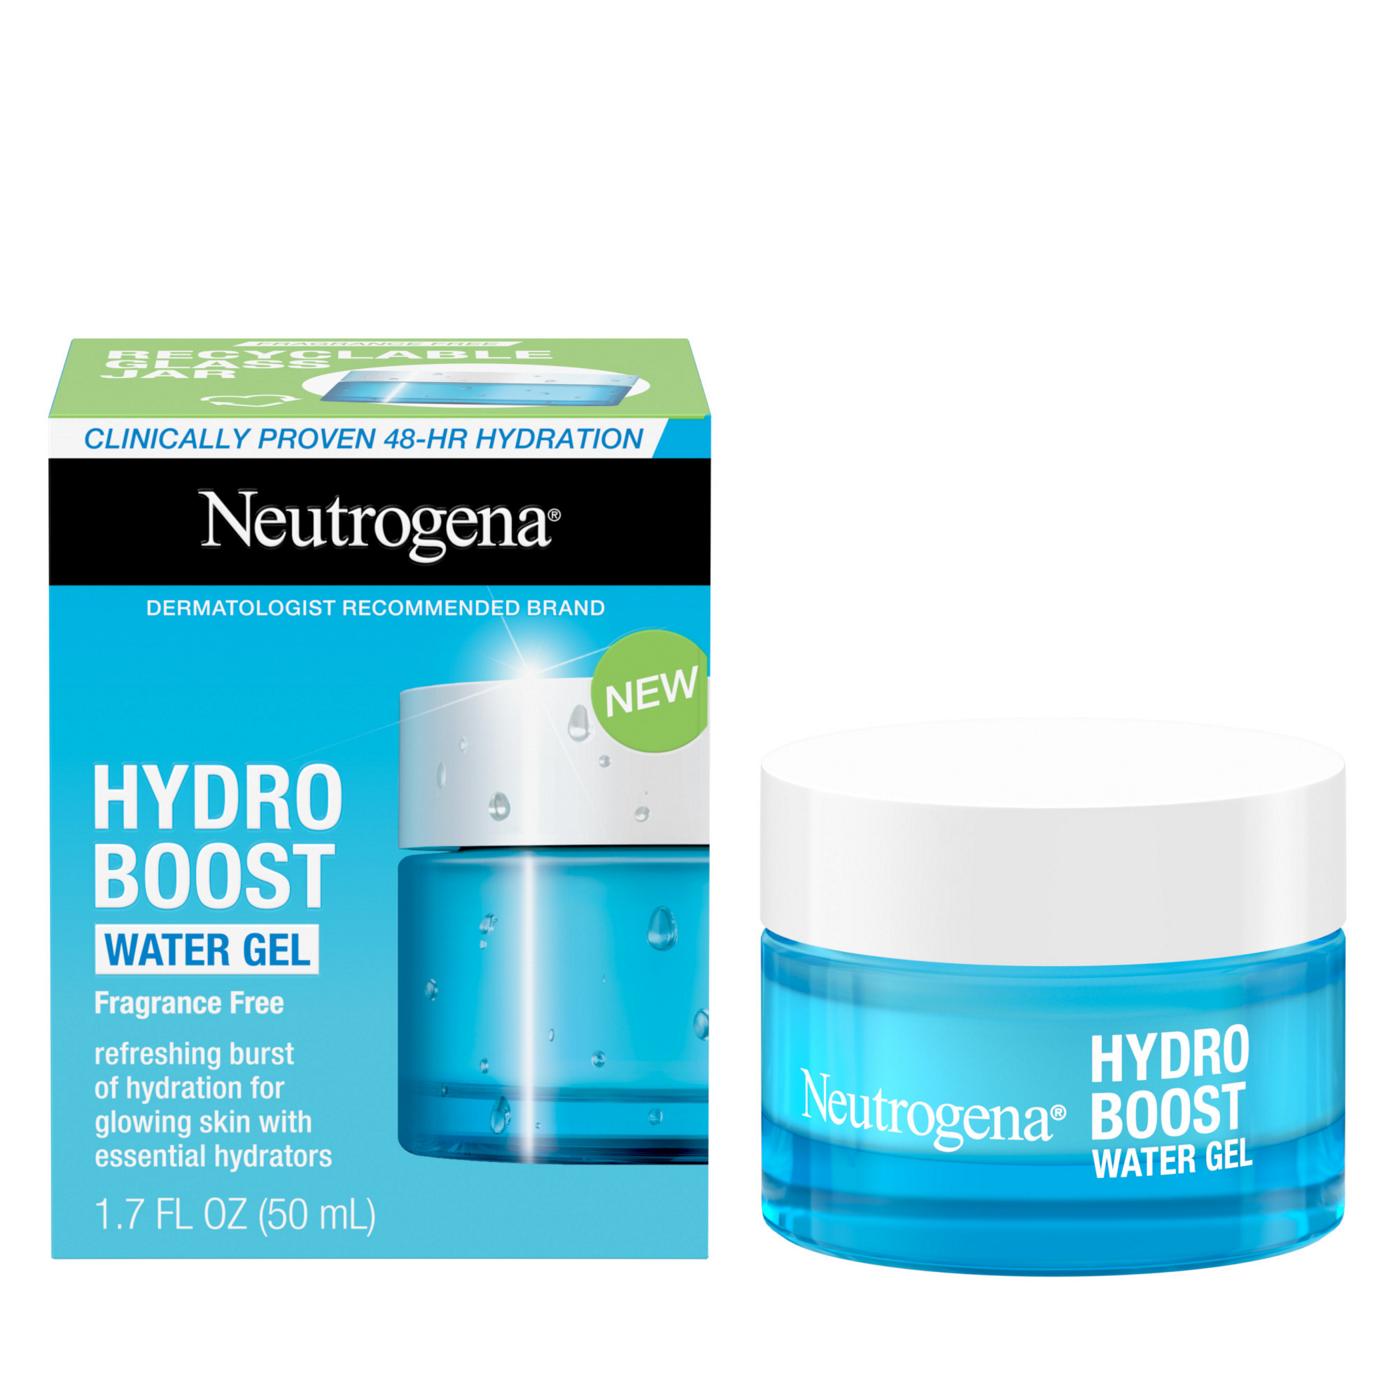 Neutrogena Hydro Boost Water Gel; image 4 of 8